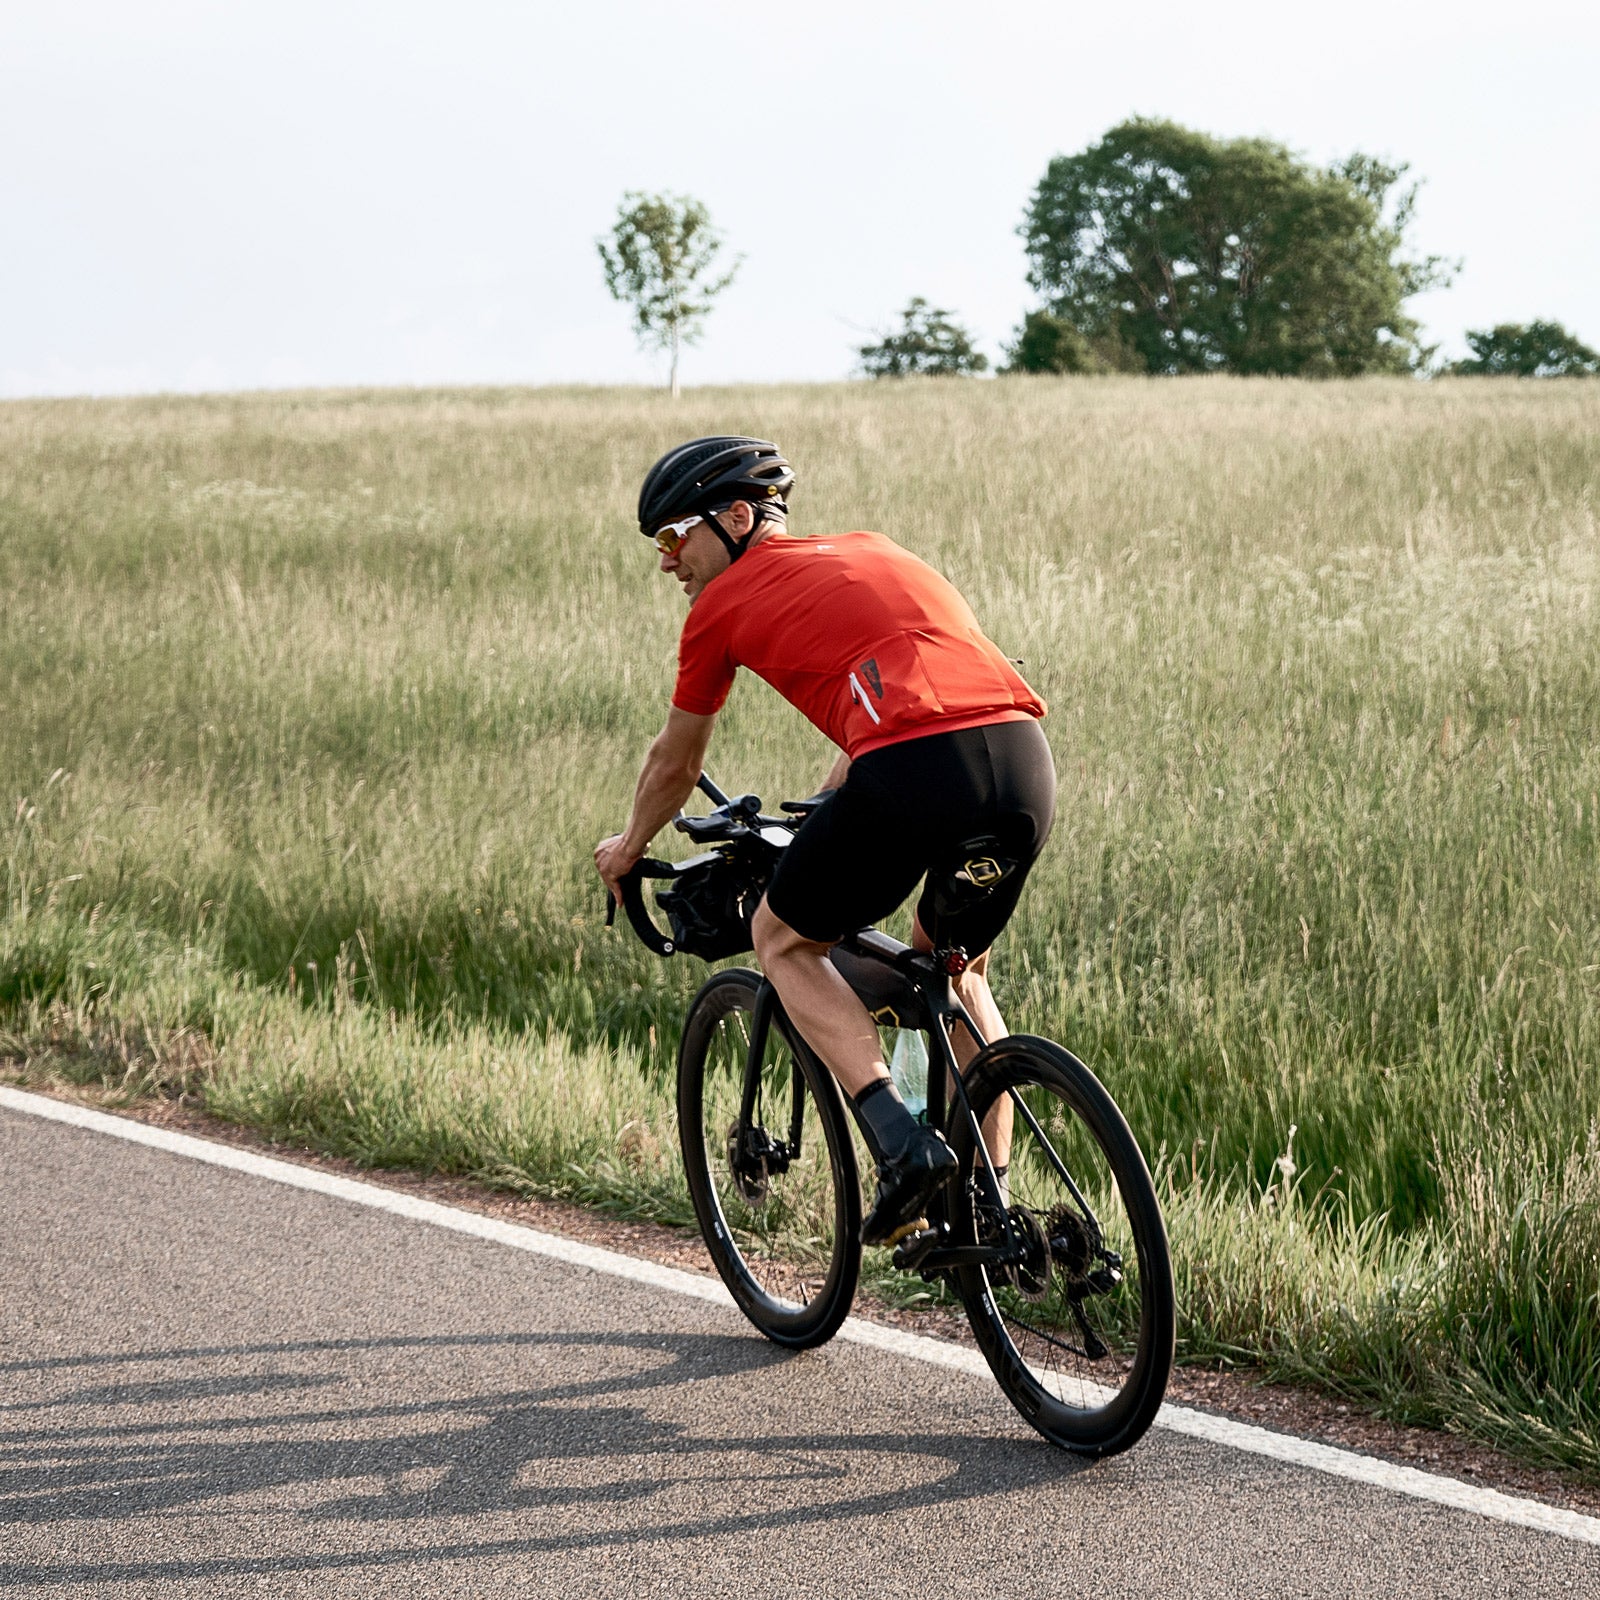 Isolator omdraaien zij is Road Biking Gear Recommended by the Pros - Outside Online